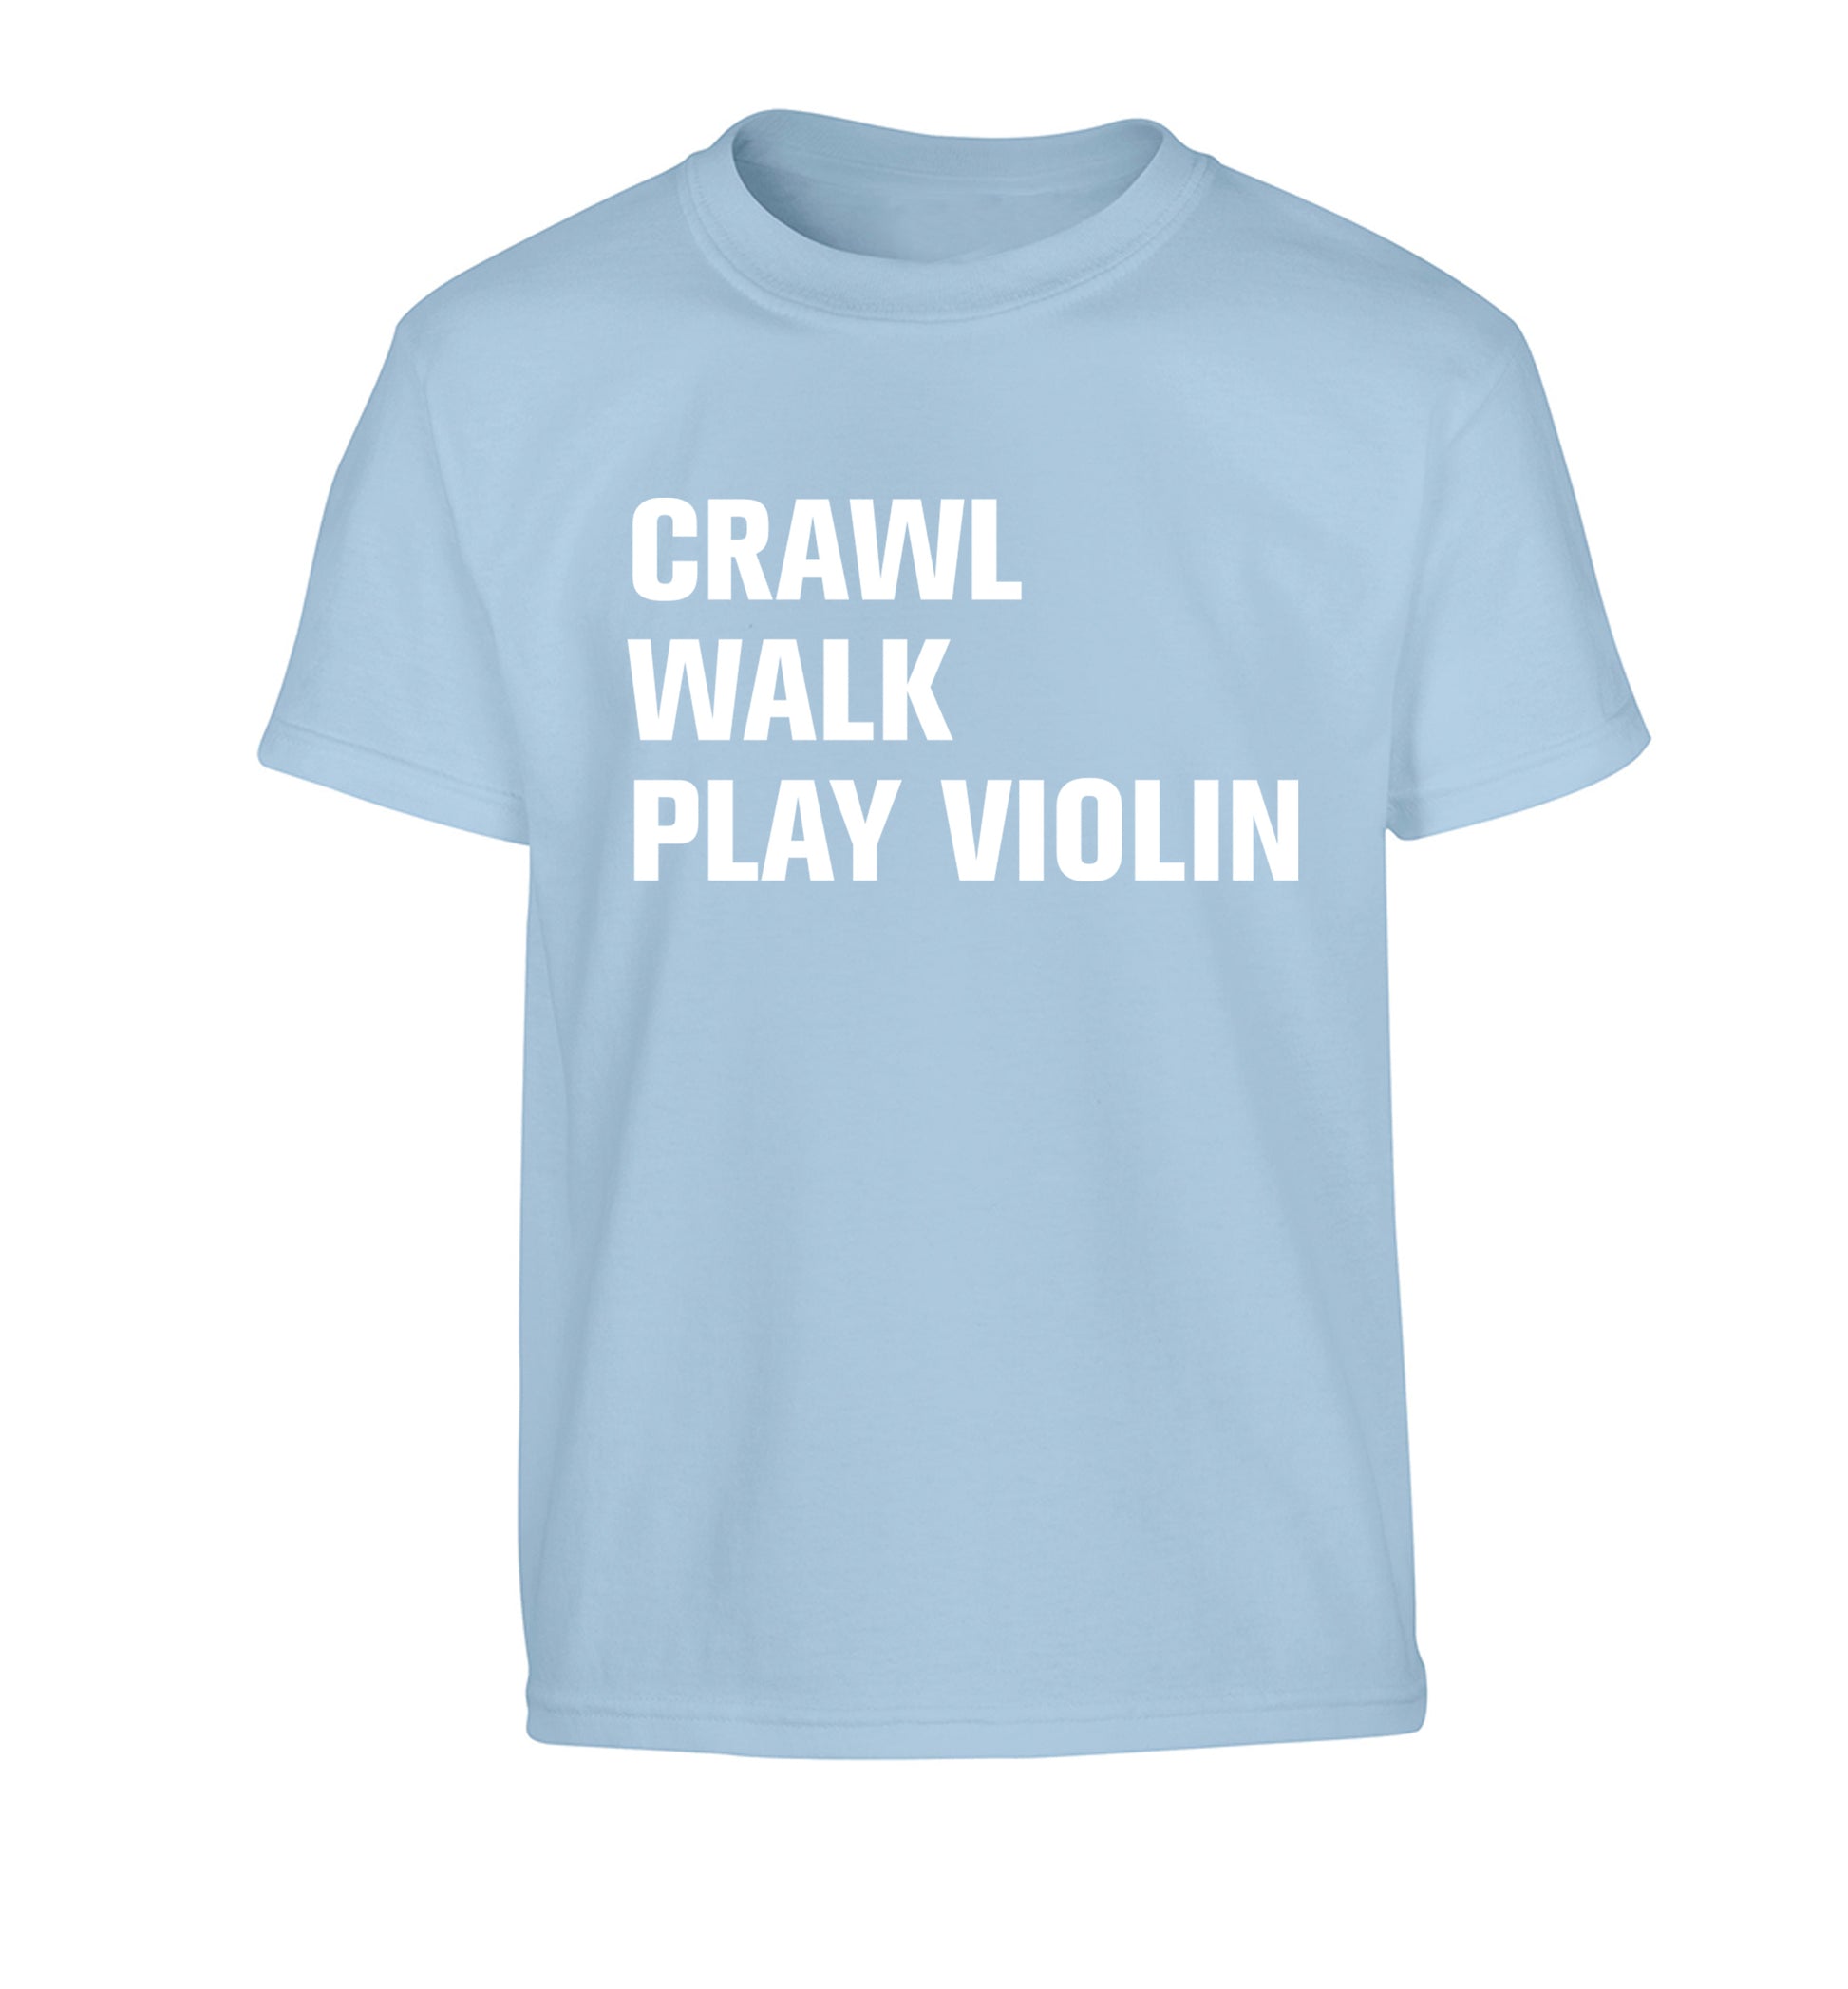 Crawl Walk Play Violin Children's light blue Tshirt 12-13 Years